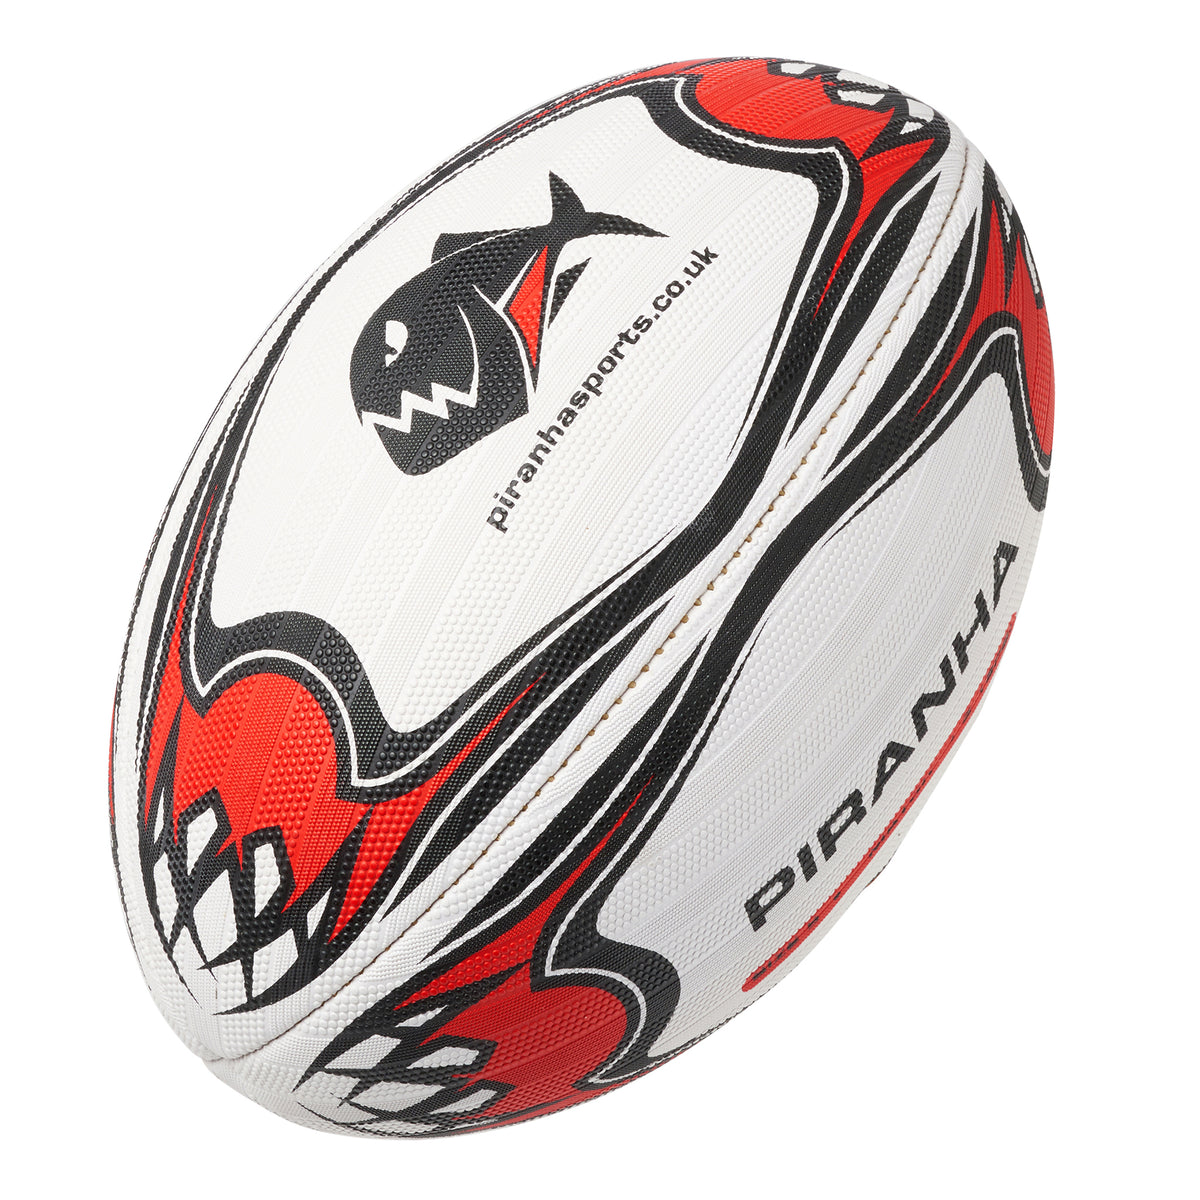 Piranha Genex Match Rugby Ball